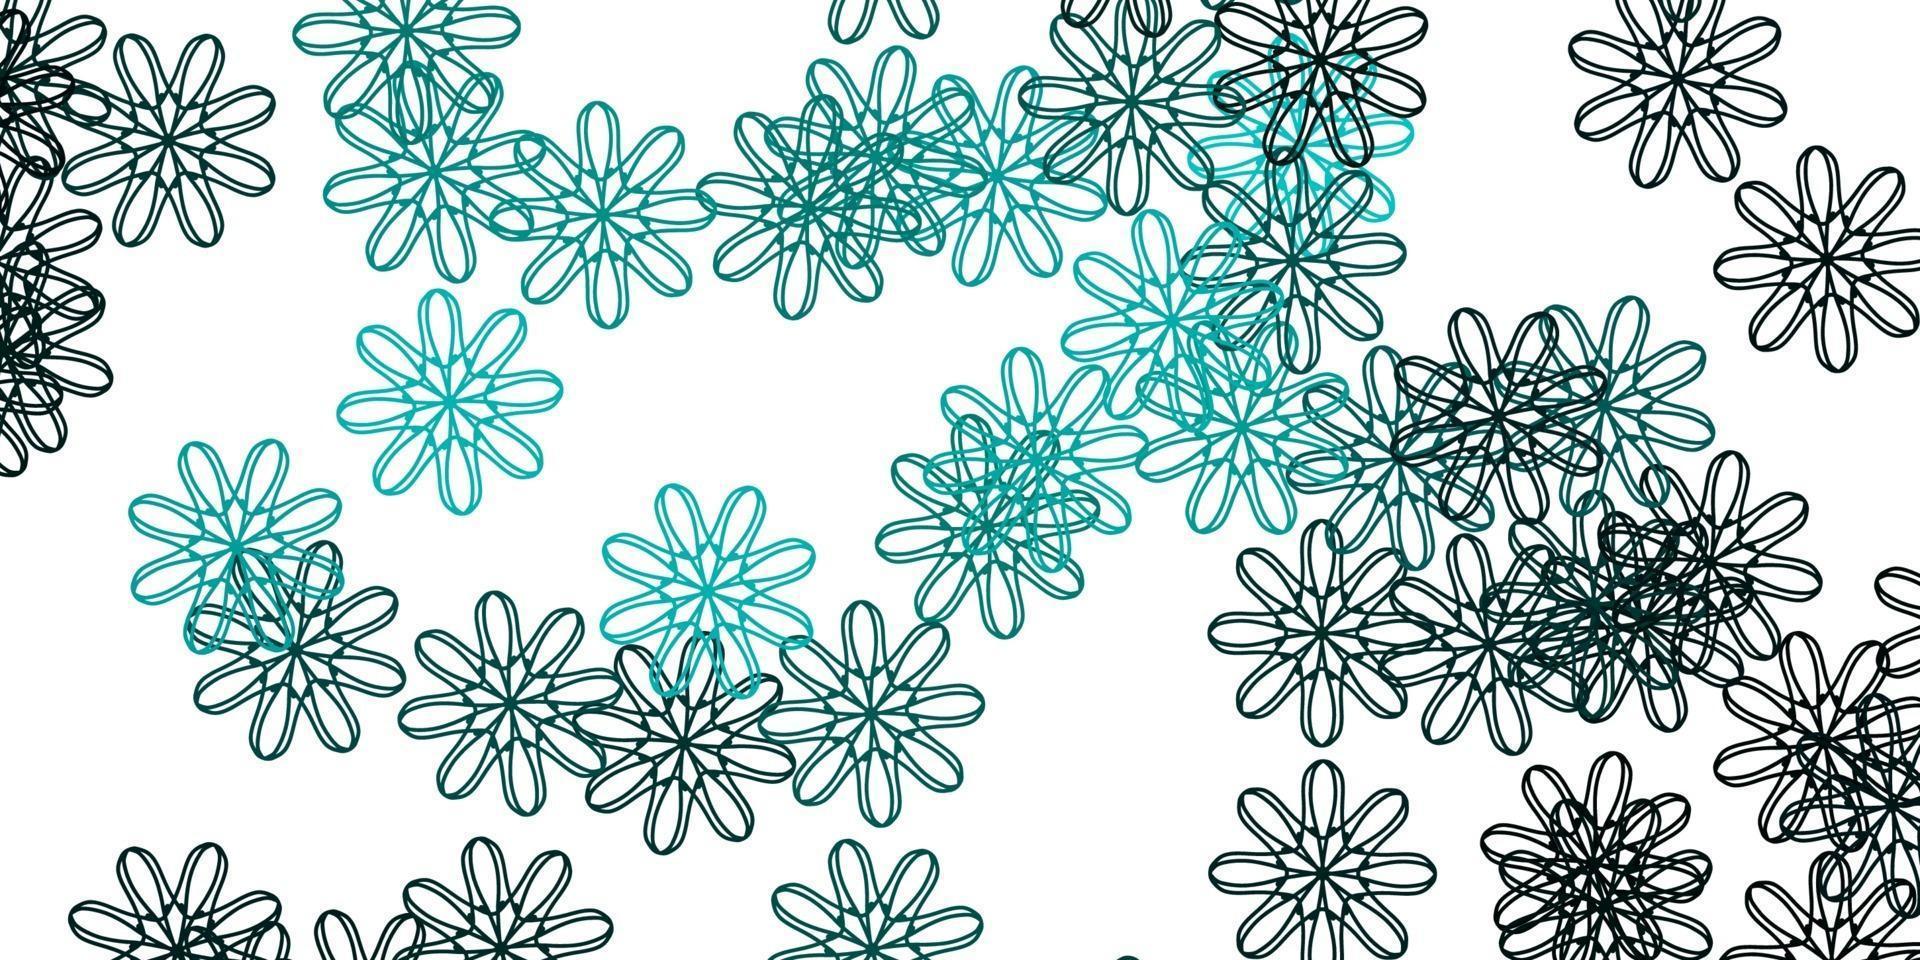 textura de doodle de vector verde claro con flores.